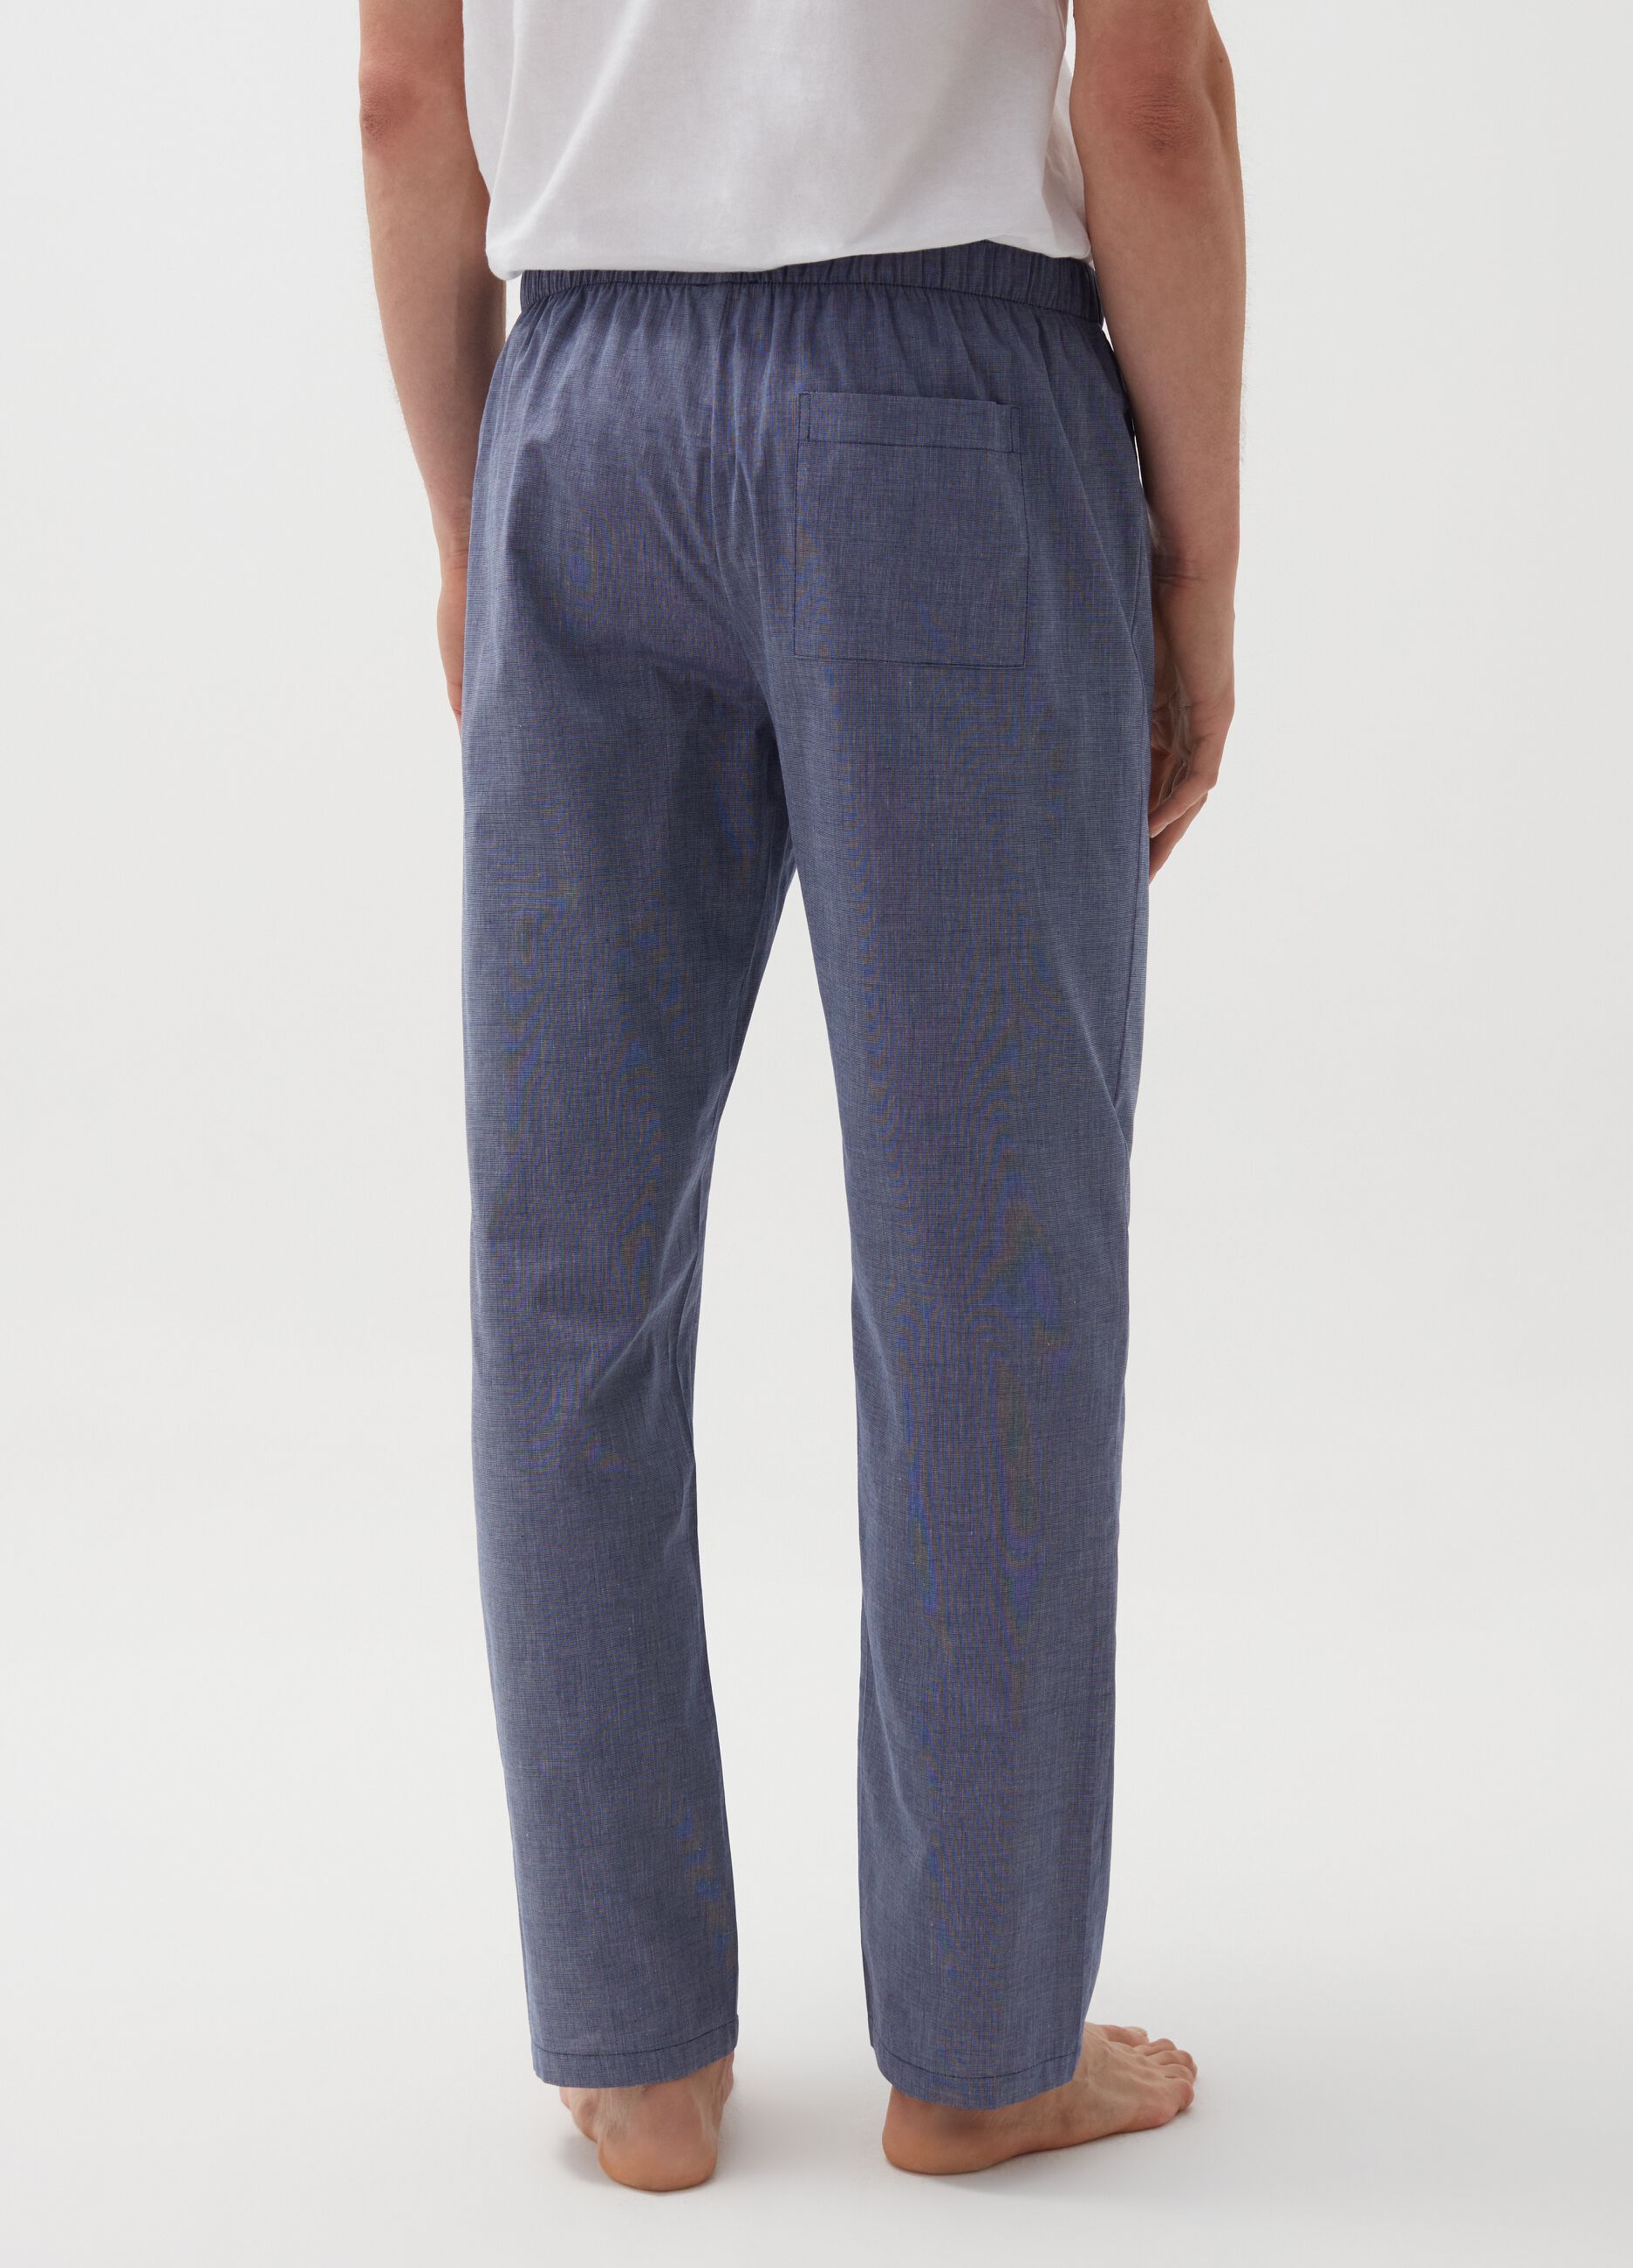 Pantalone pigiama in cotone con coulisse